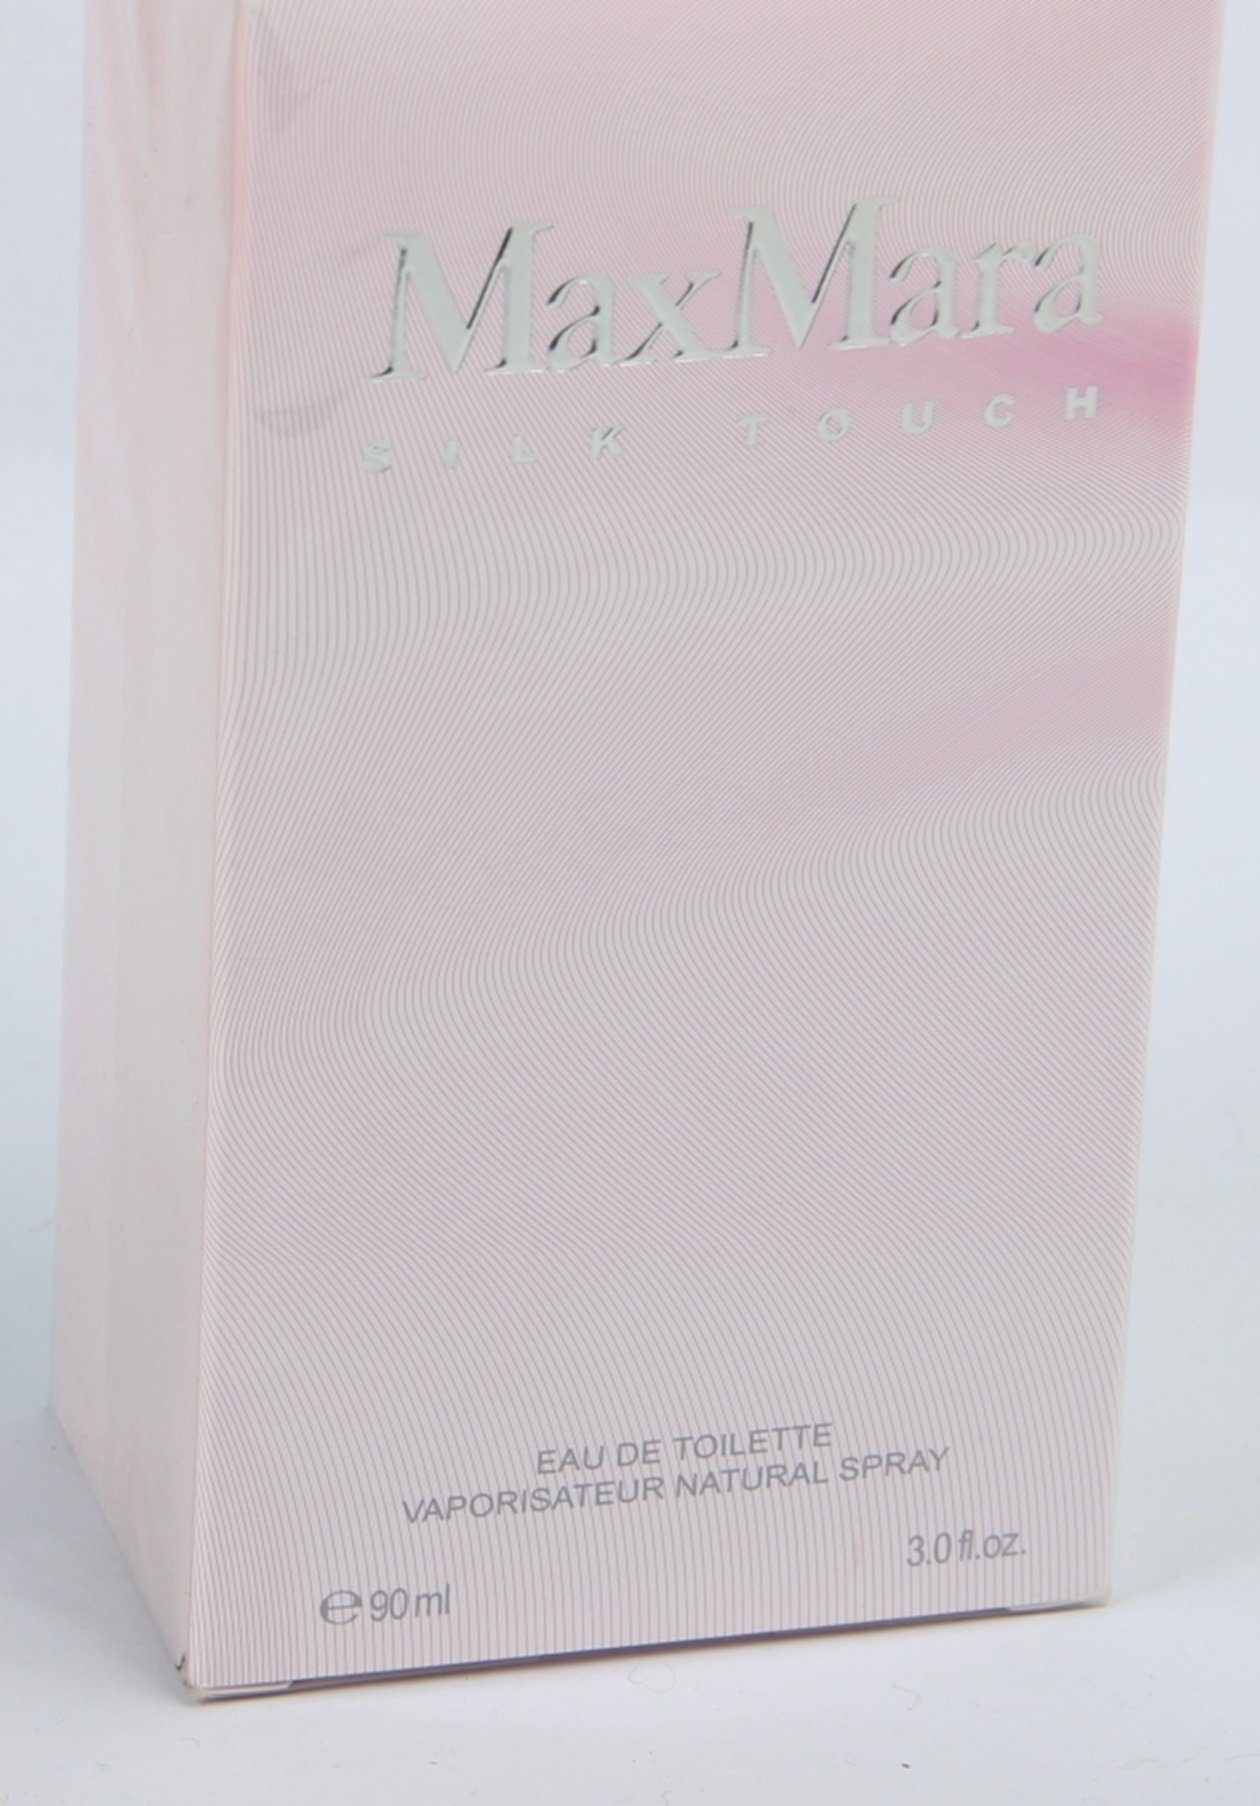 Mara Silk Max Eau Eau Toilette Mara de Toilette de 90ml Touch Max